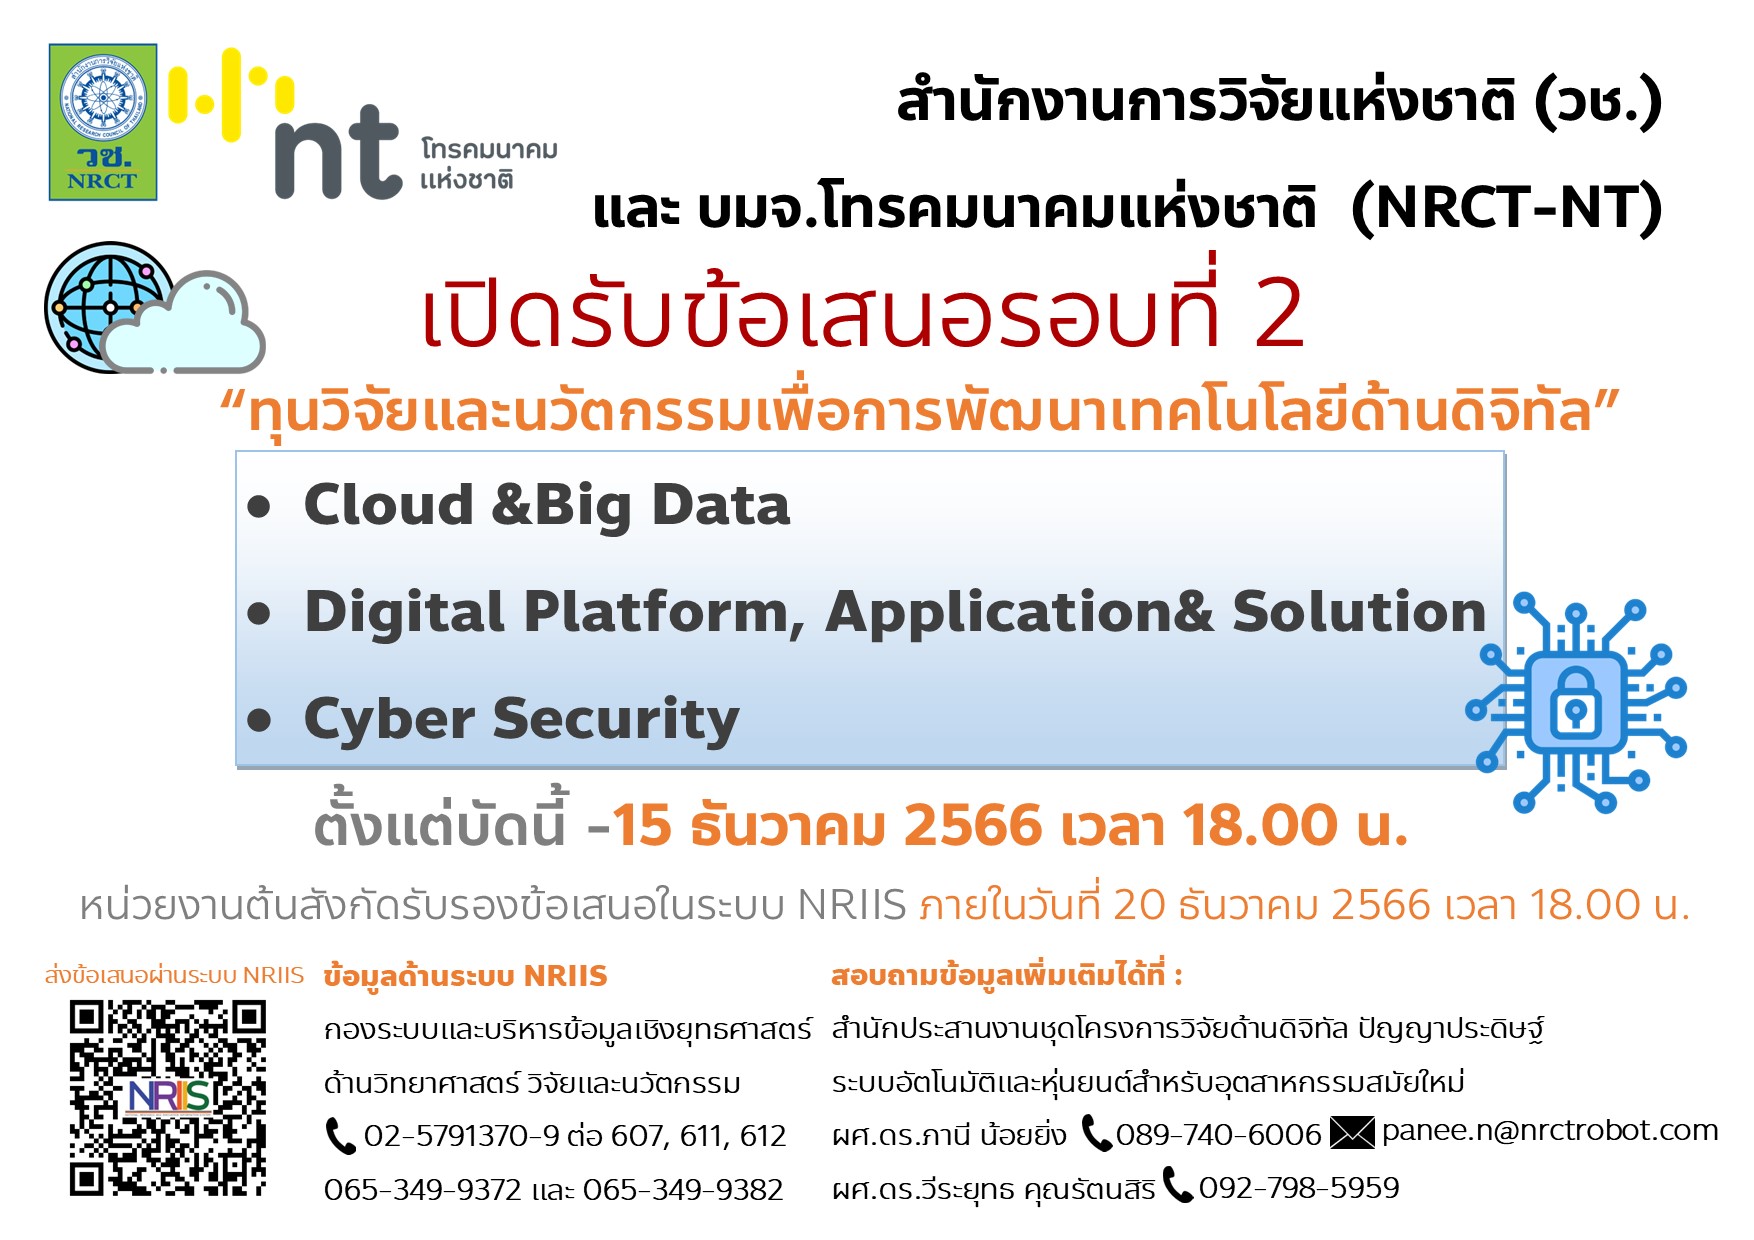 NRCT-NT เปิดรับข้อเสนอทุนวิจัยและนวัตกรรมเพื่อการพัฒนาเทคโนโลยีด้านดิจิทัล ปีงบประมาณ 2567 (รอบที่ 2)